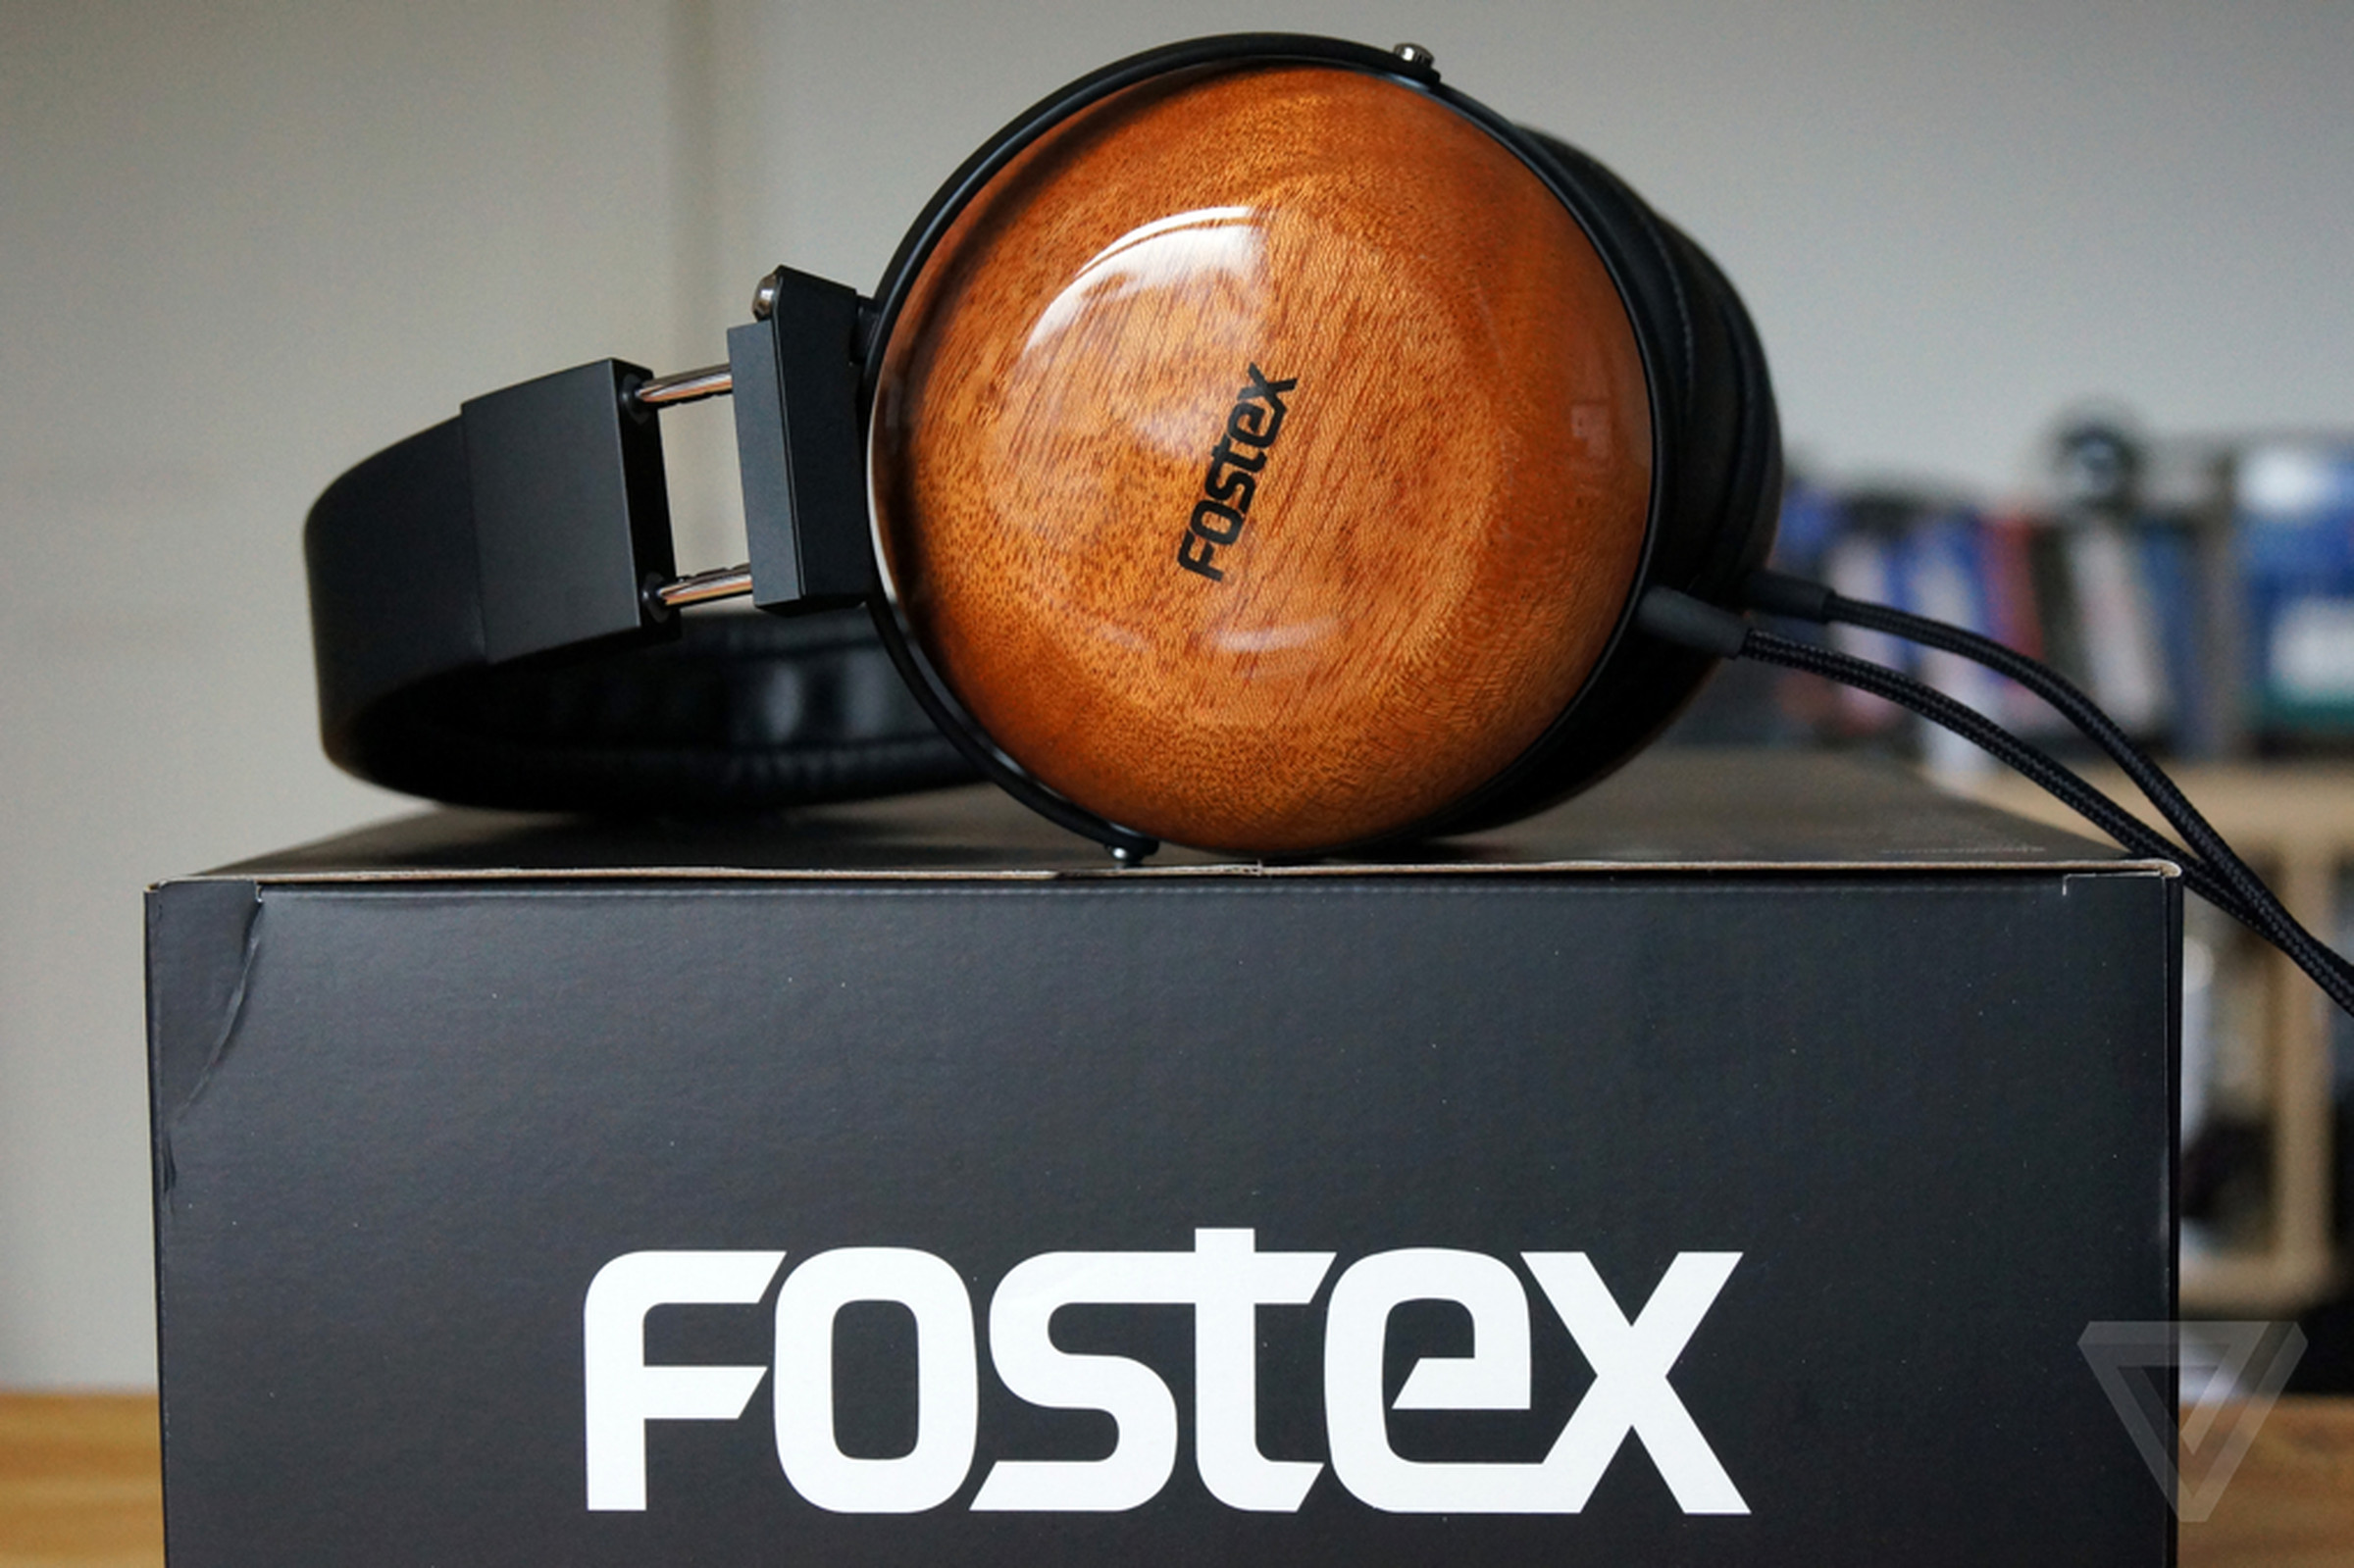 Fostex Massdrop TH-X00 headphones